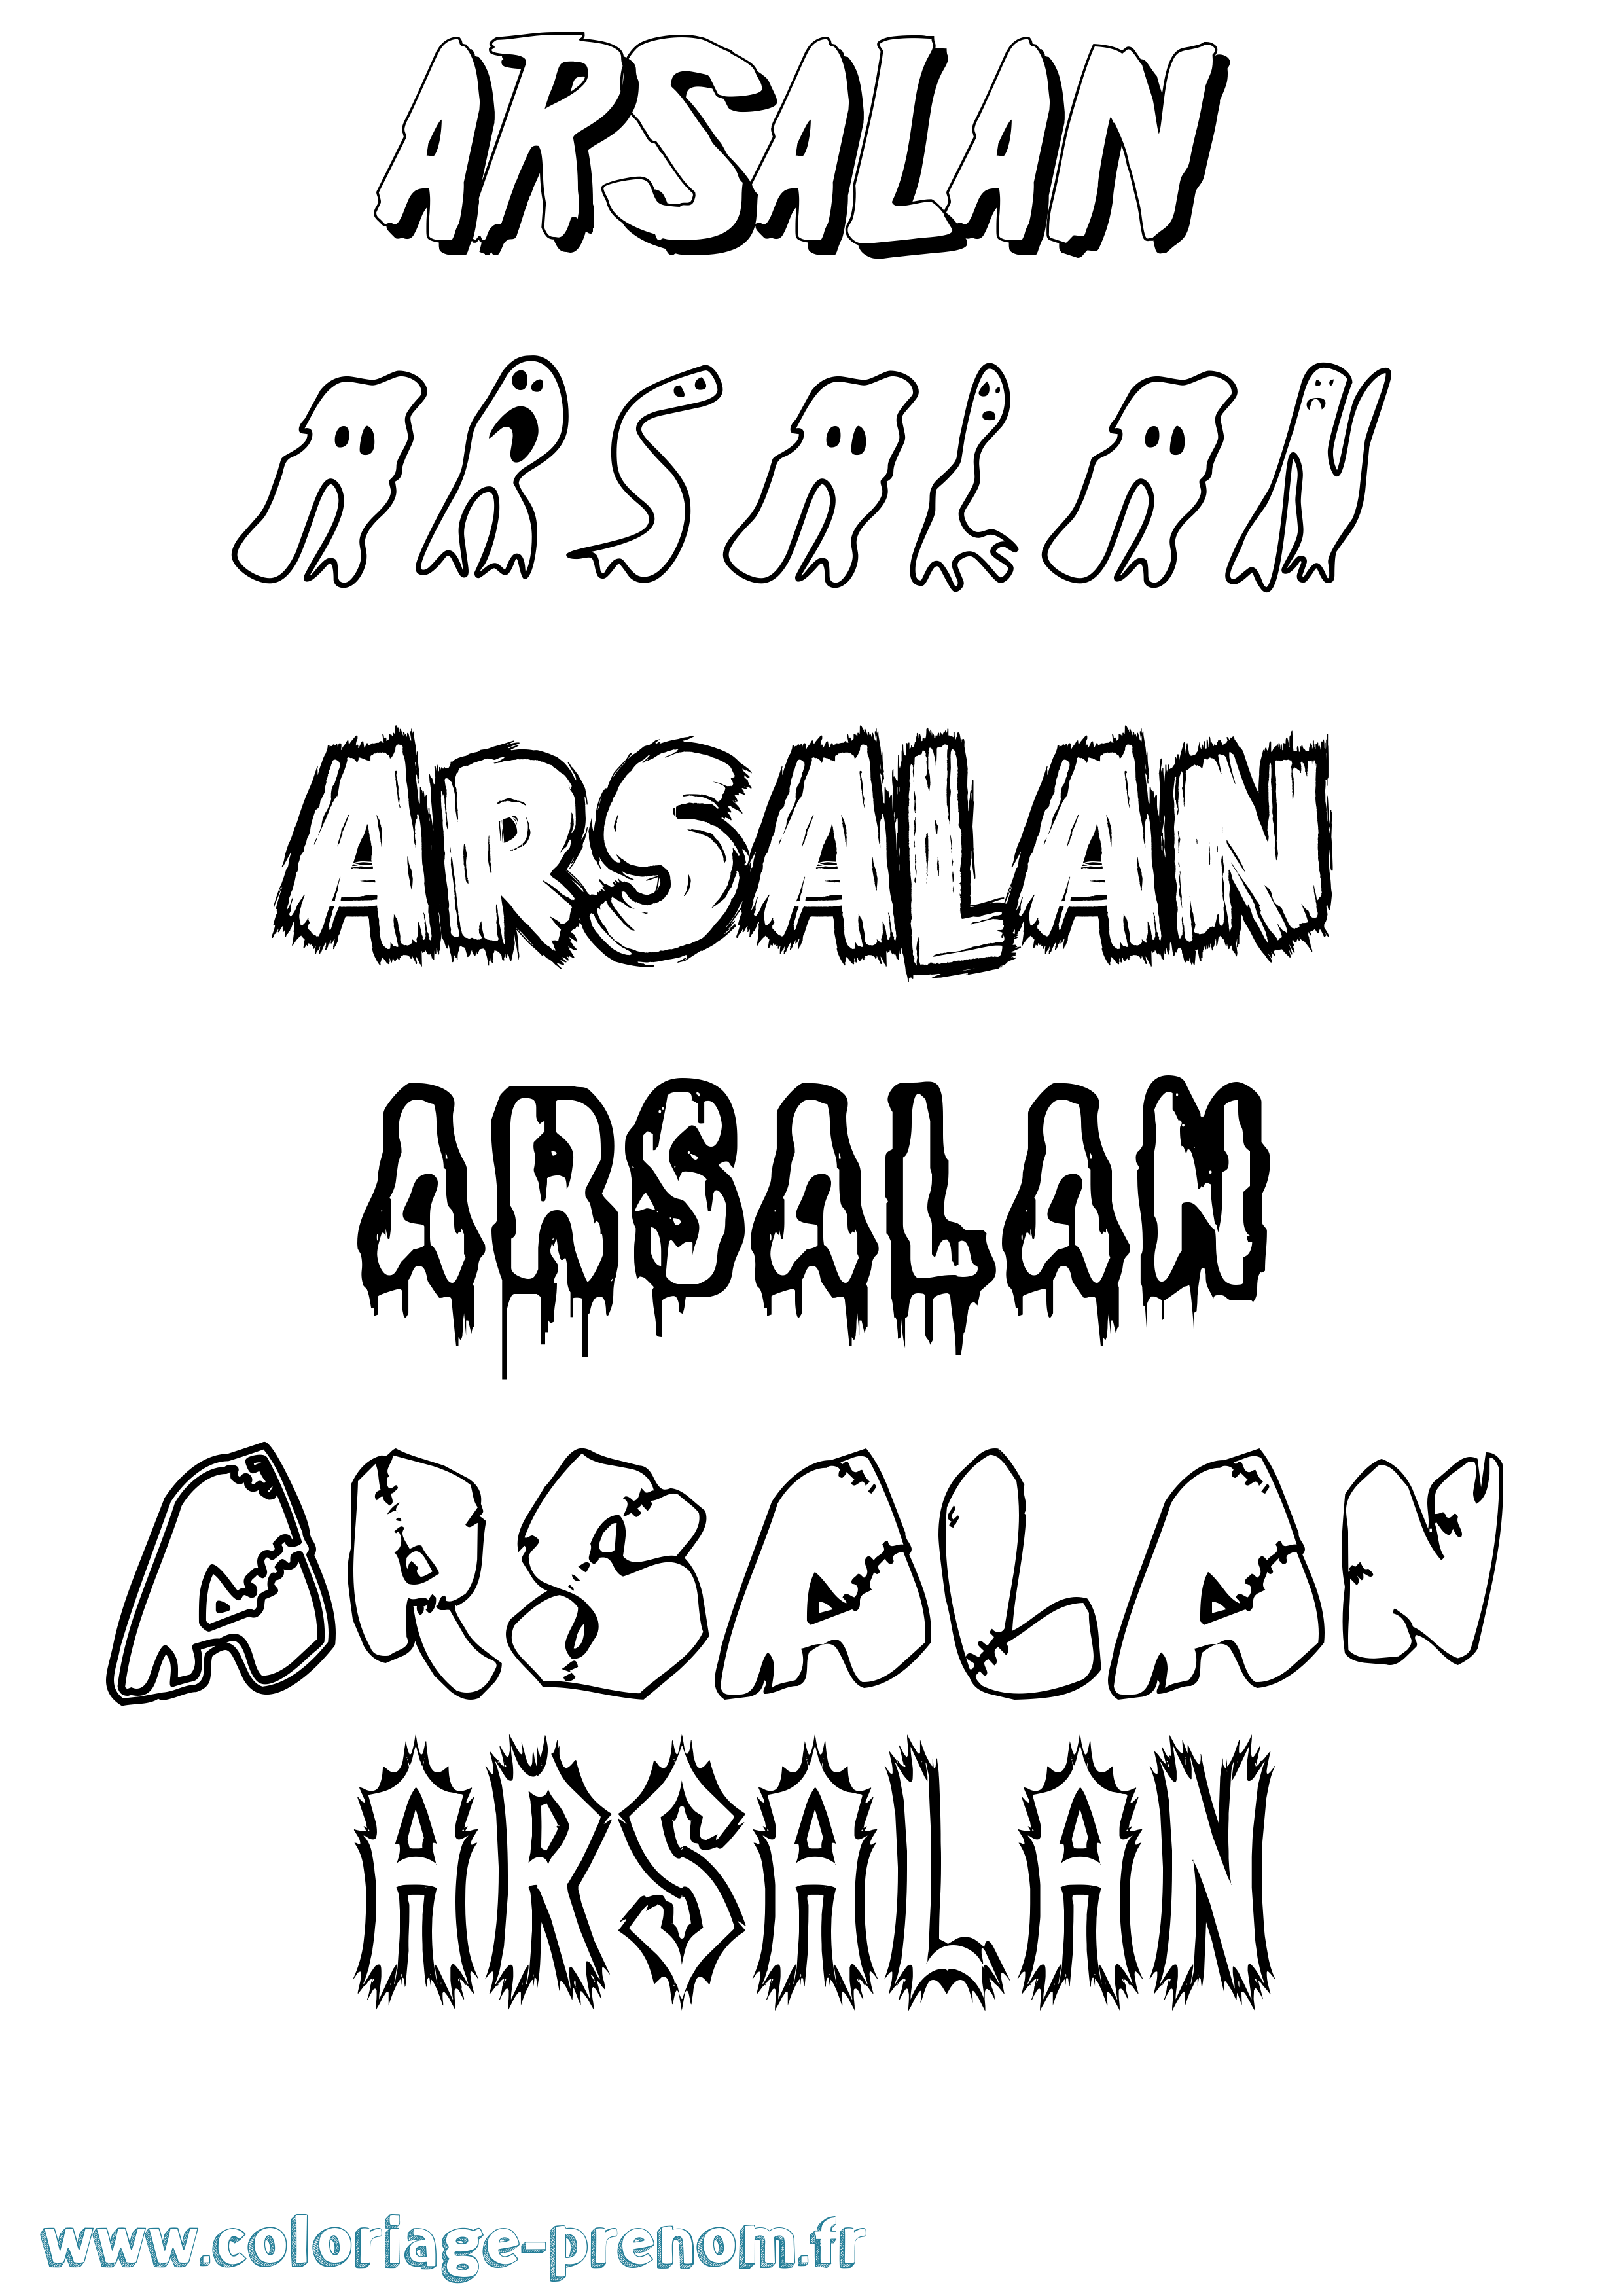 Coloriage prénom Arsalan Frisson